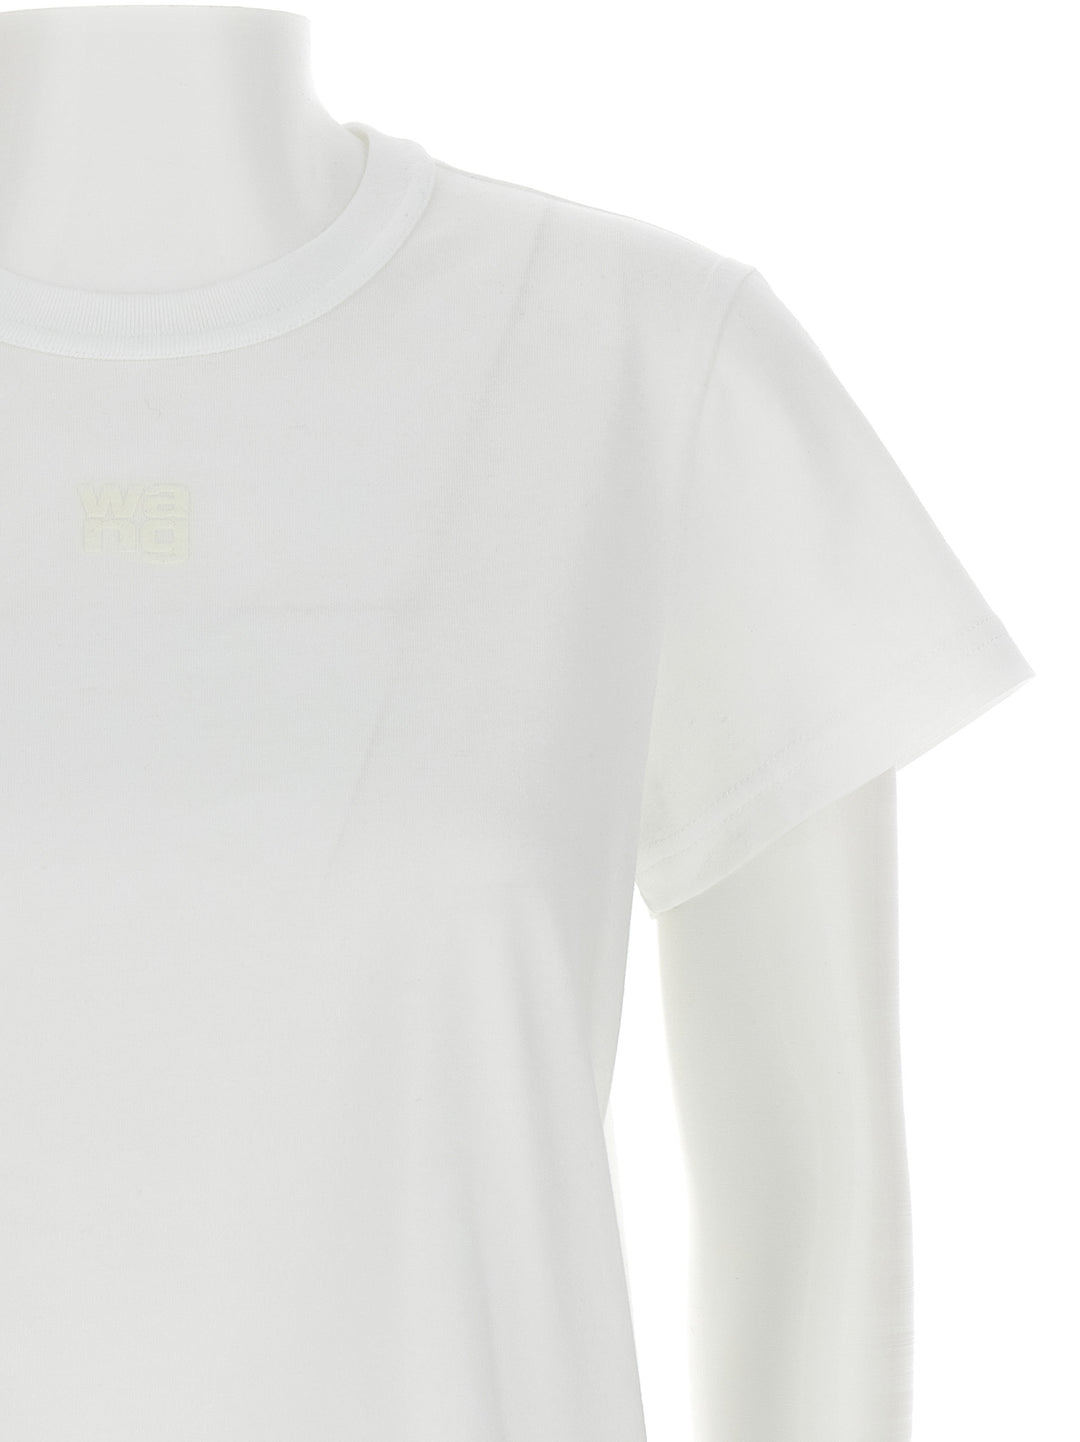 Essential Jsy Shrunk T Shirt Bianco